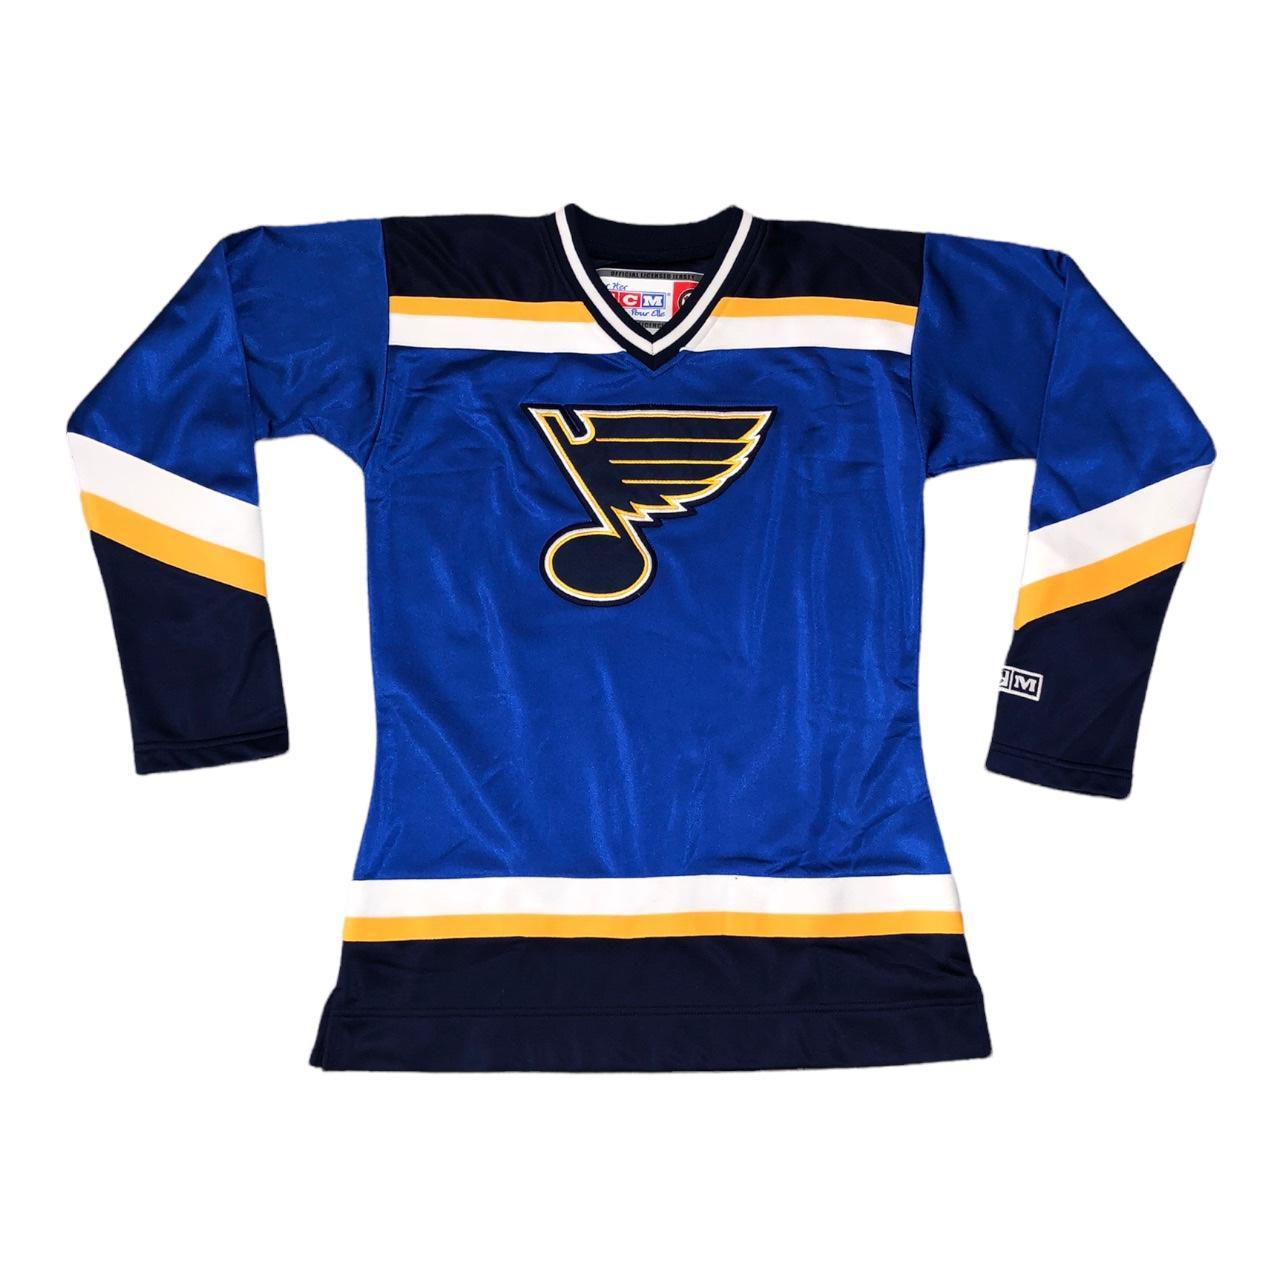 St. Louis Blues Jerseys, Blues Hockey Jerseys, Authentic Blues